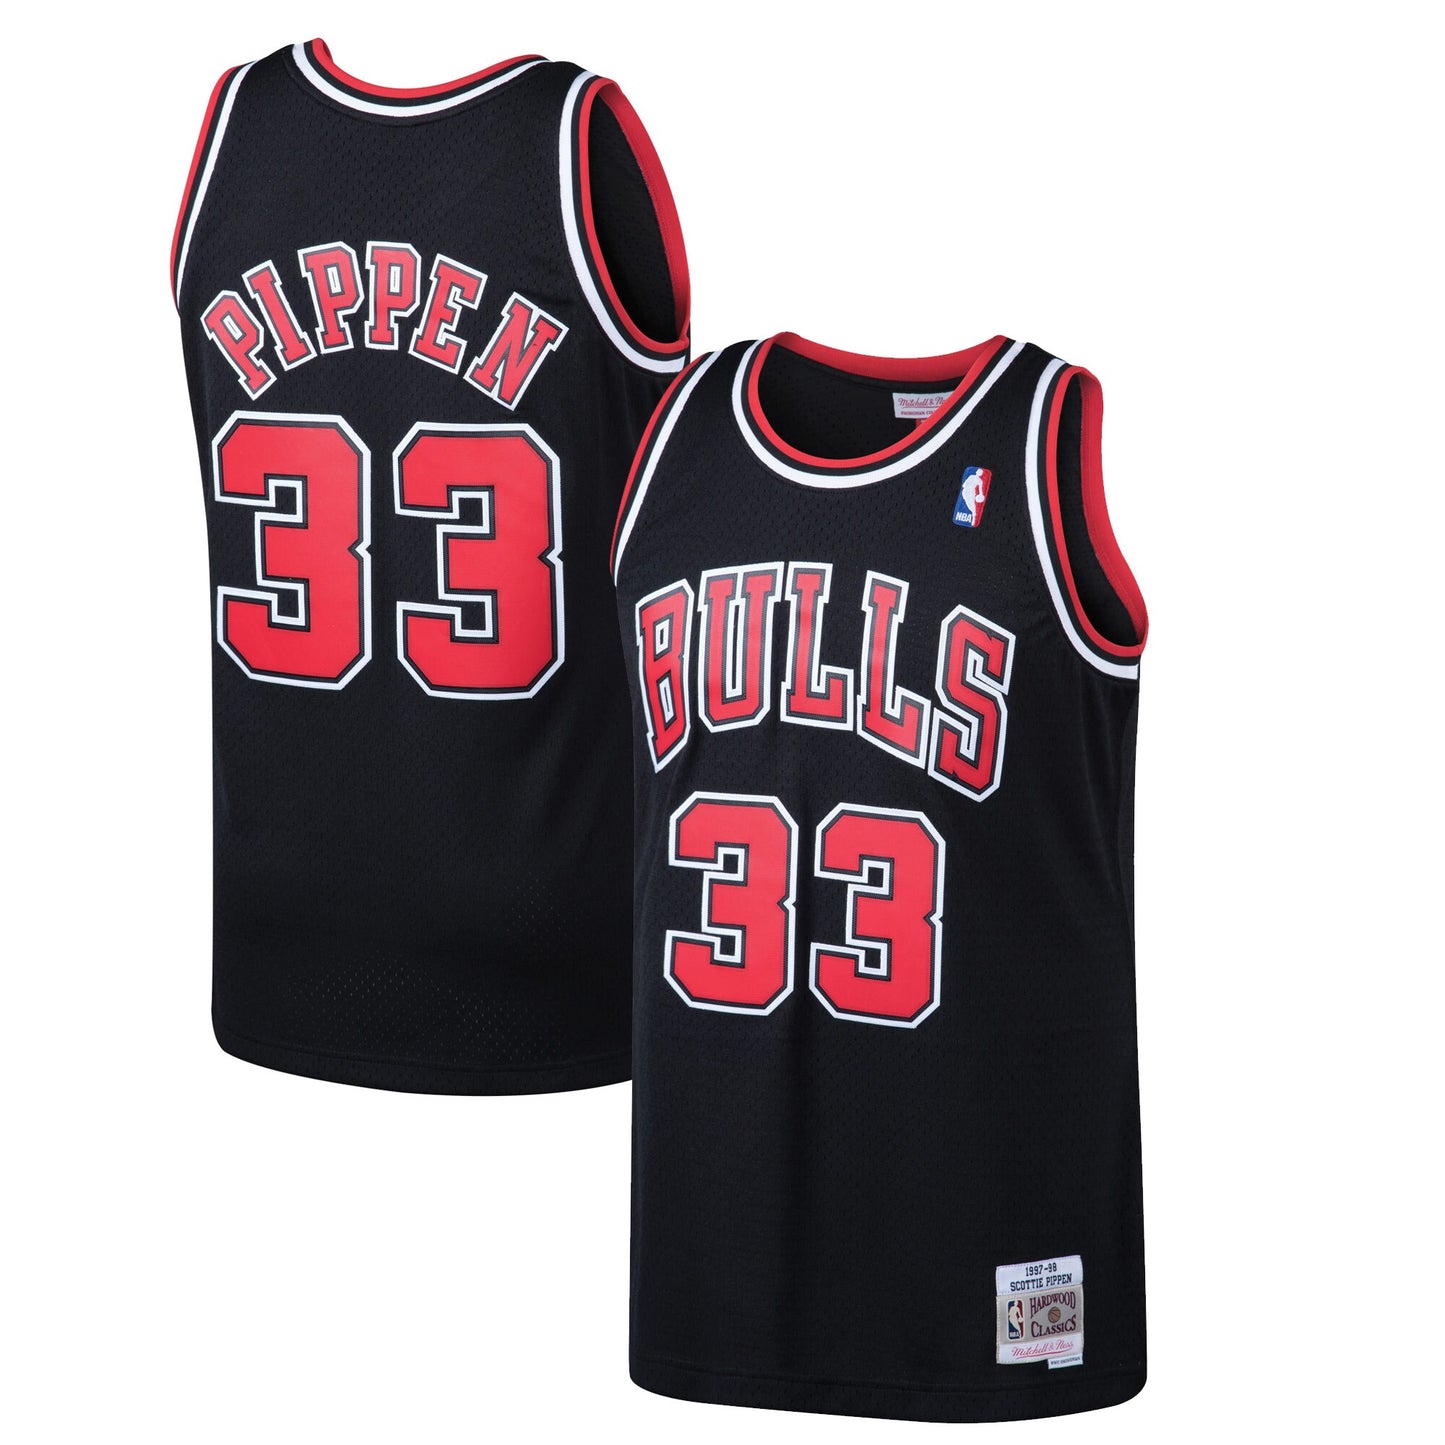 Scottie Pippen Chicago Bulls Mitchell & Ness Hardwood Classics Swingman Jersey - Black